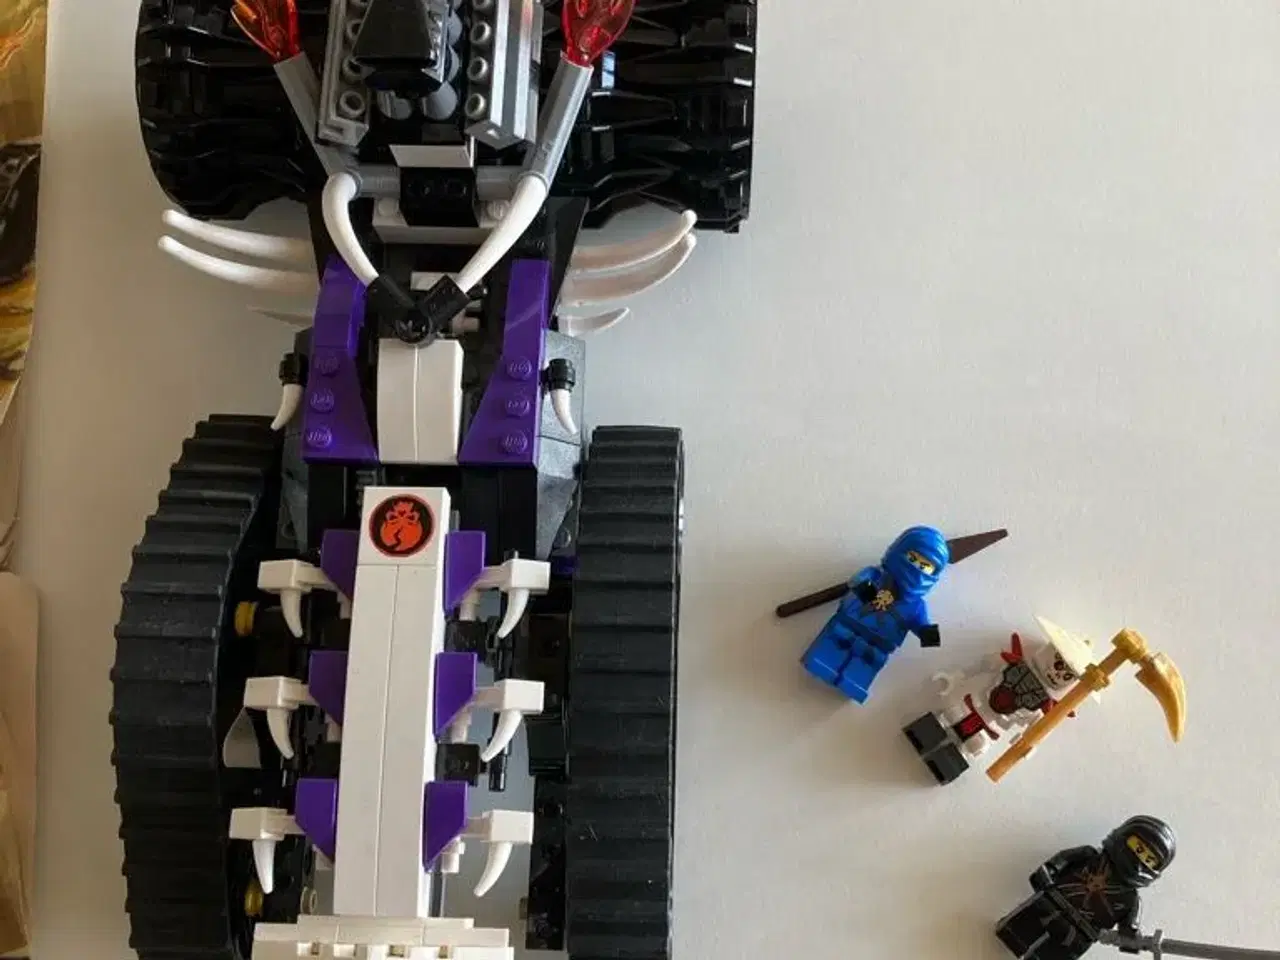 Billede 2 - Lego bil fra Ninjago